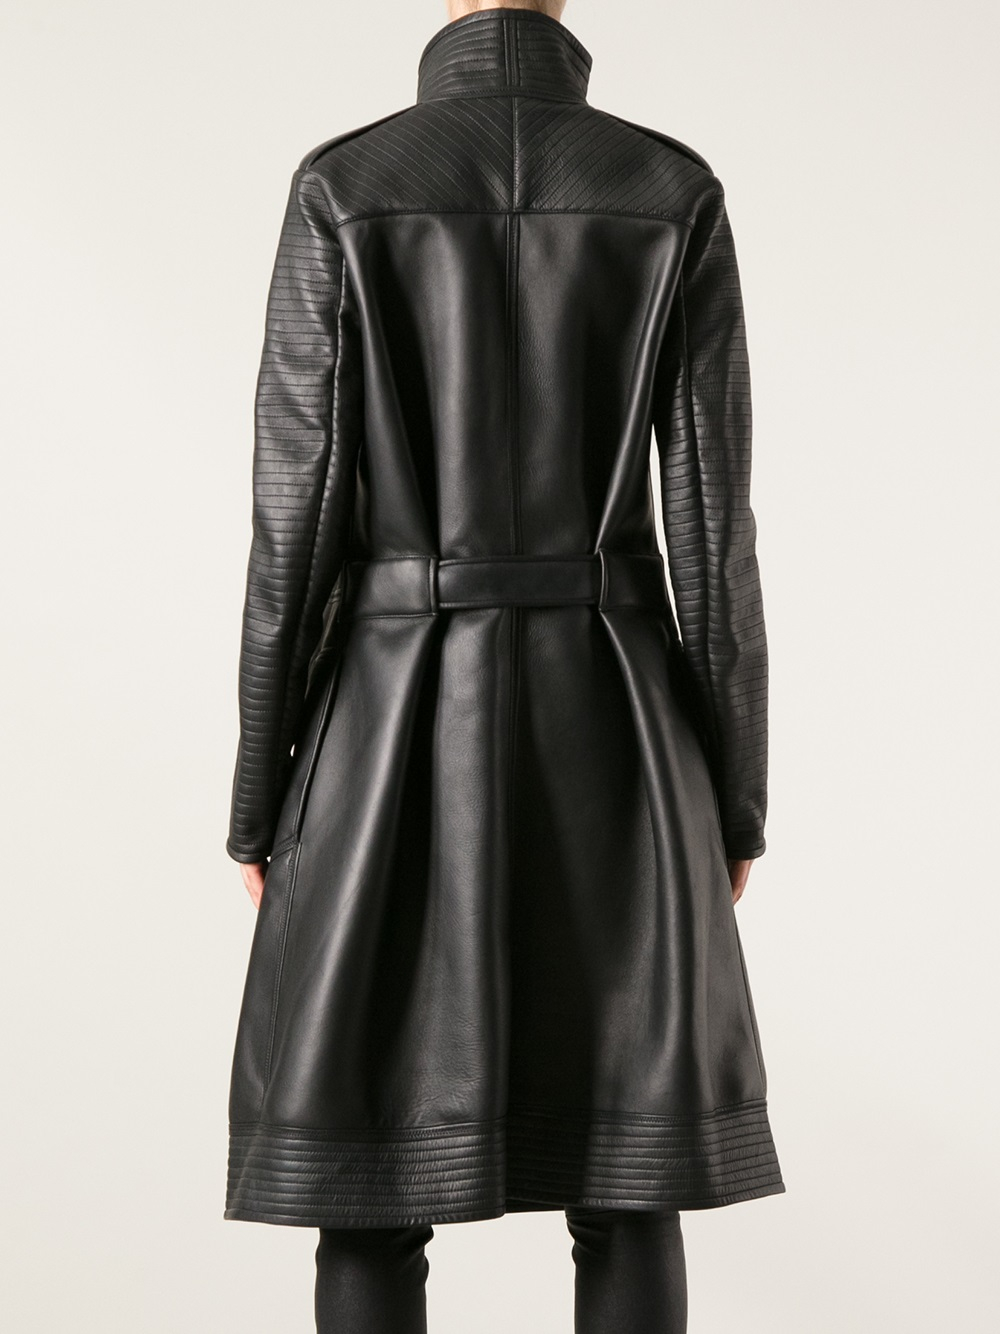 Lyst - Gareth Pugh Leather Coat in Black